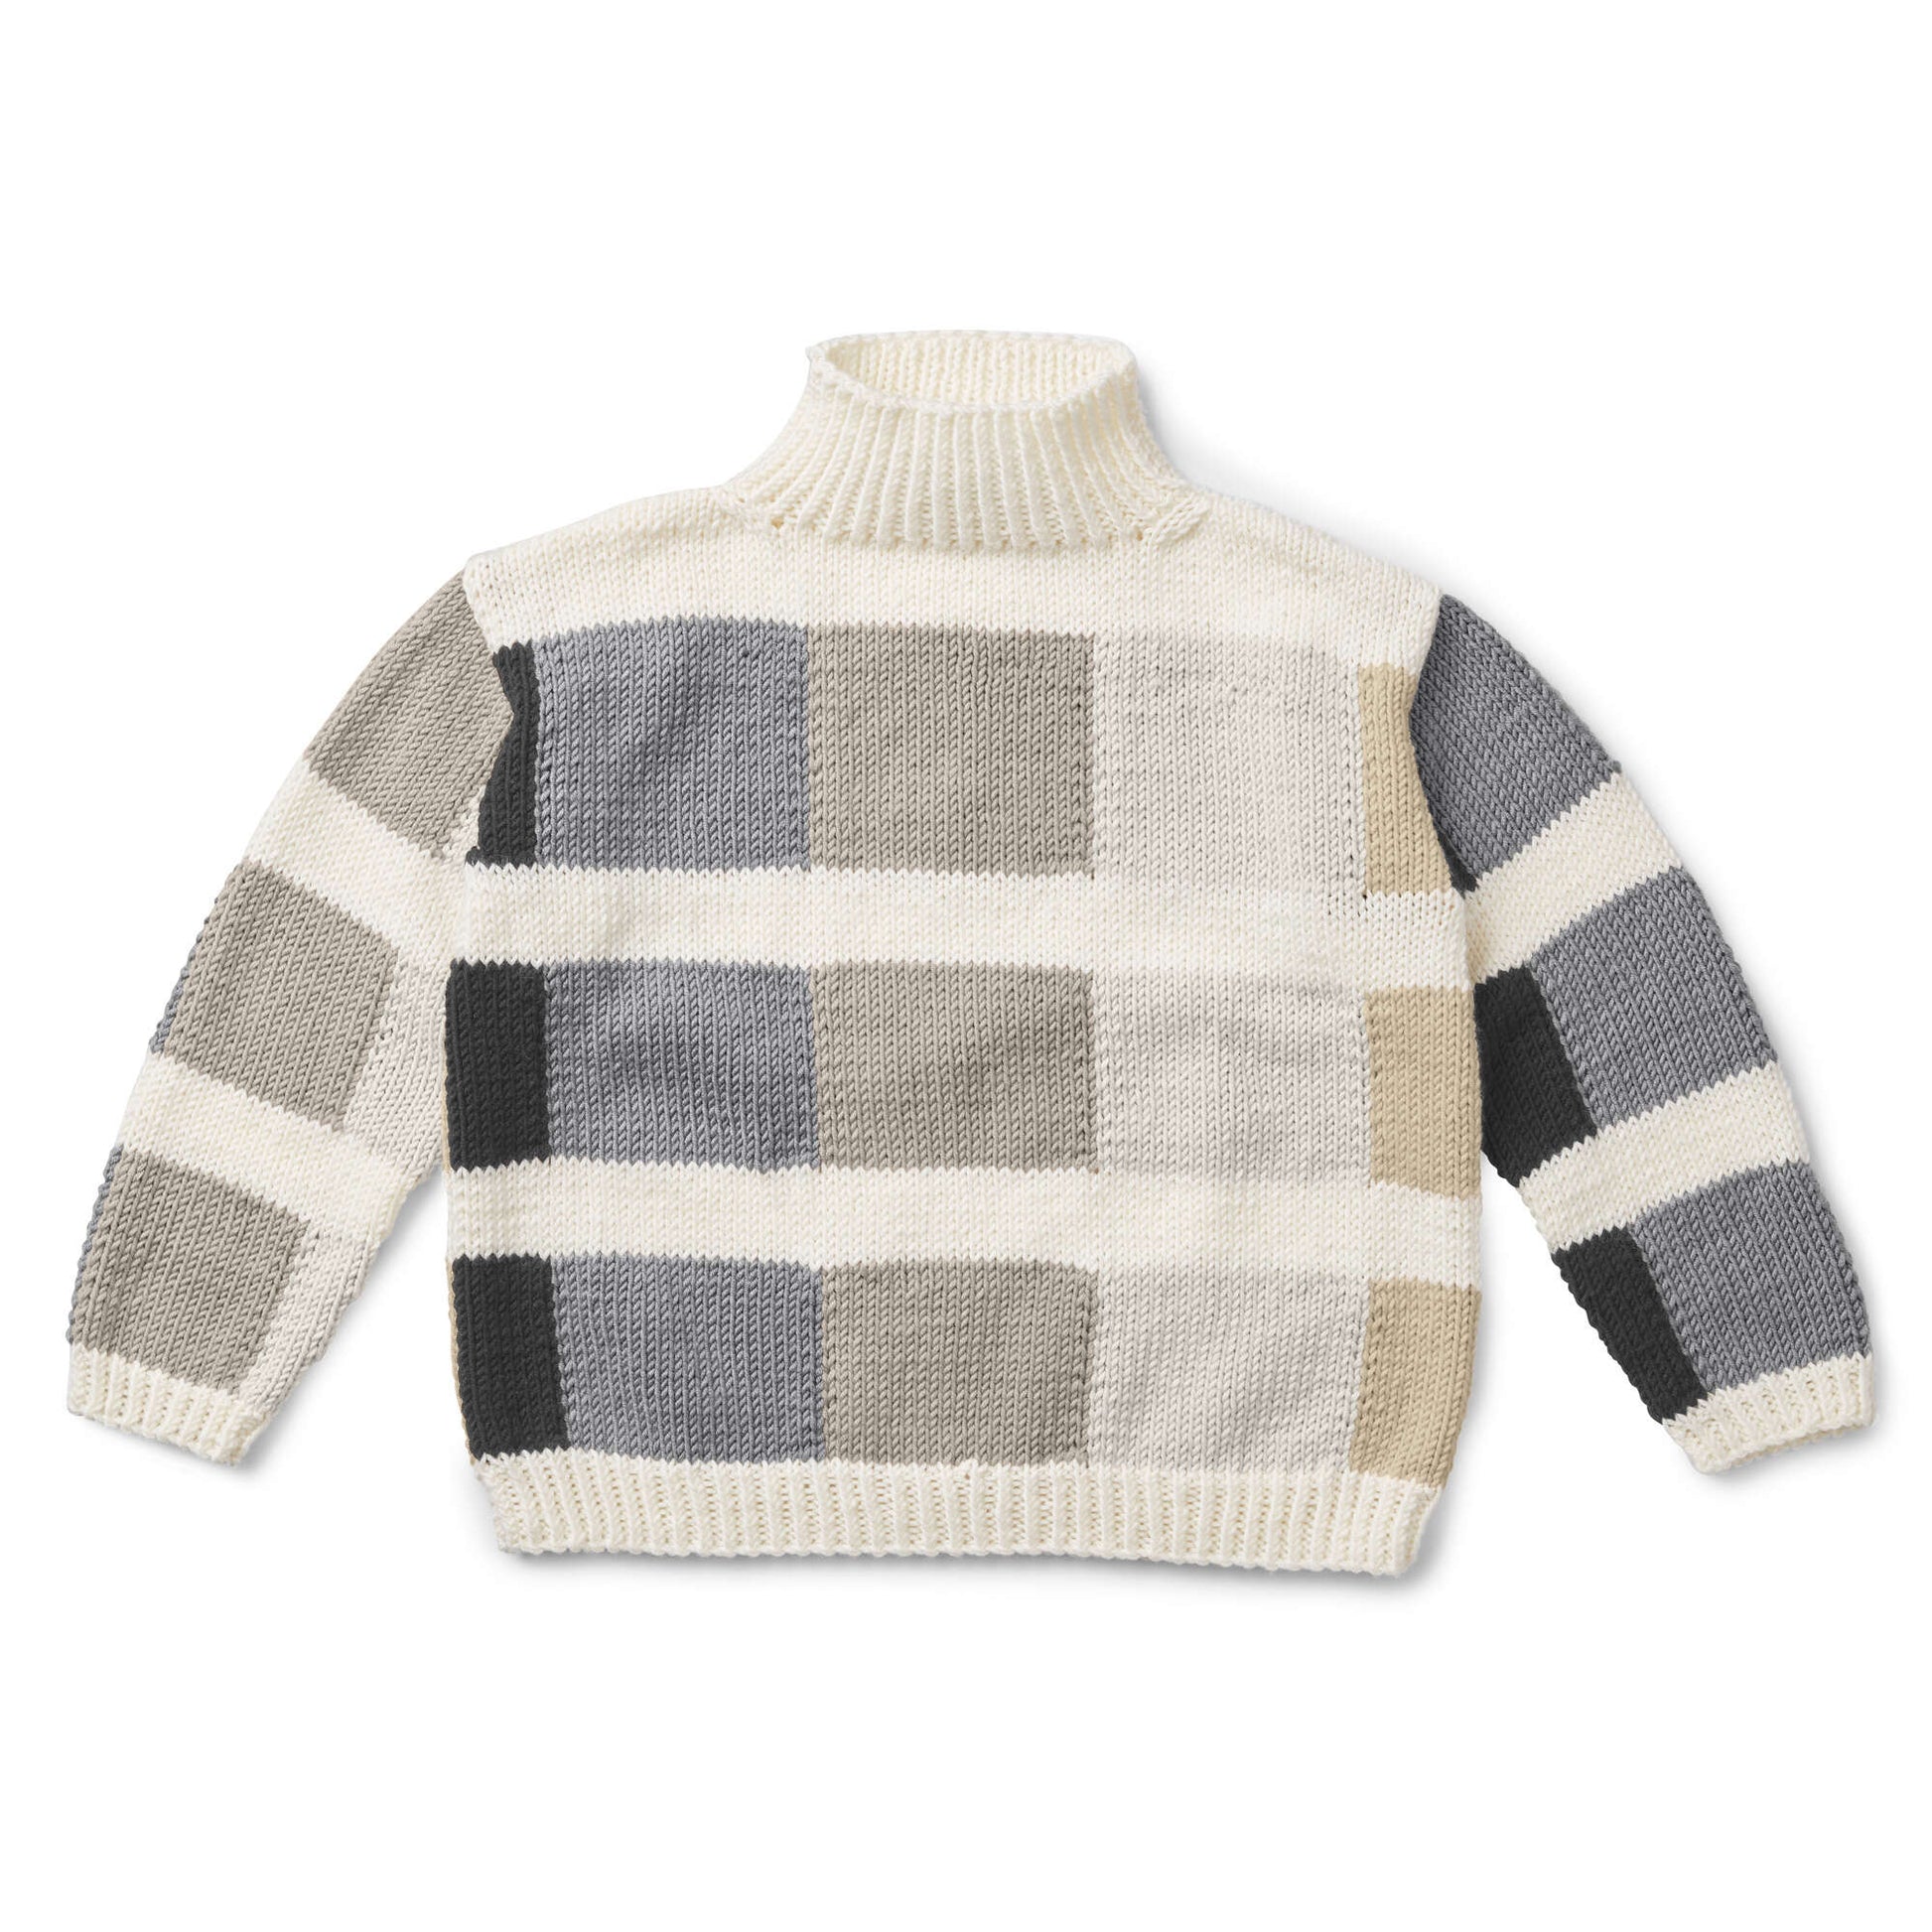 Free Caron X Pantone Color Swatch Knit Sweater Pattern